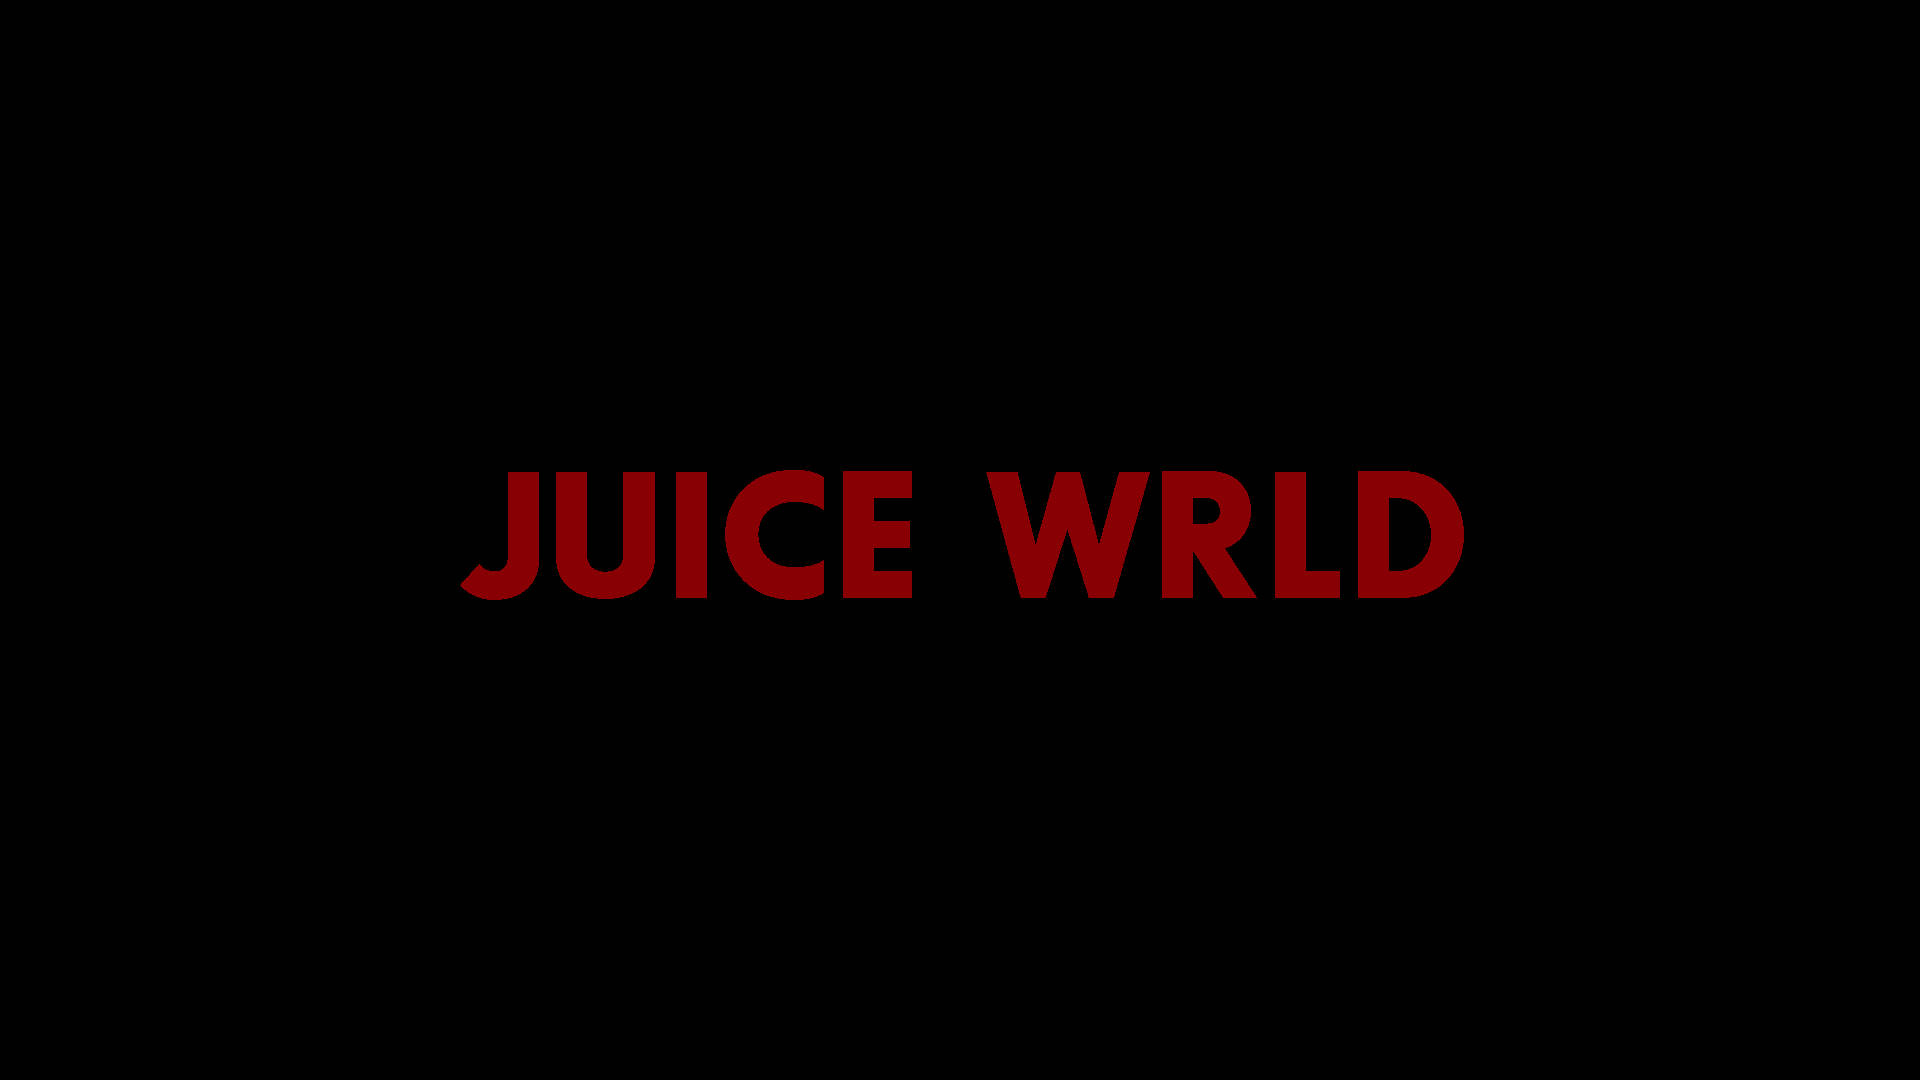 Free Juice Wrld Wallpaper Downloads, [300+] Juice Wrld Wallpapers for FREE  